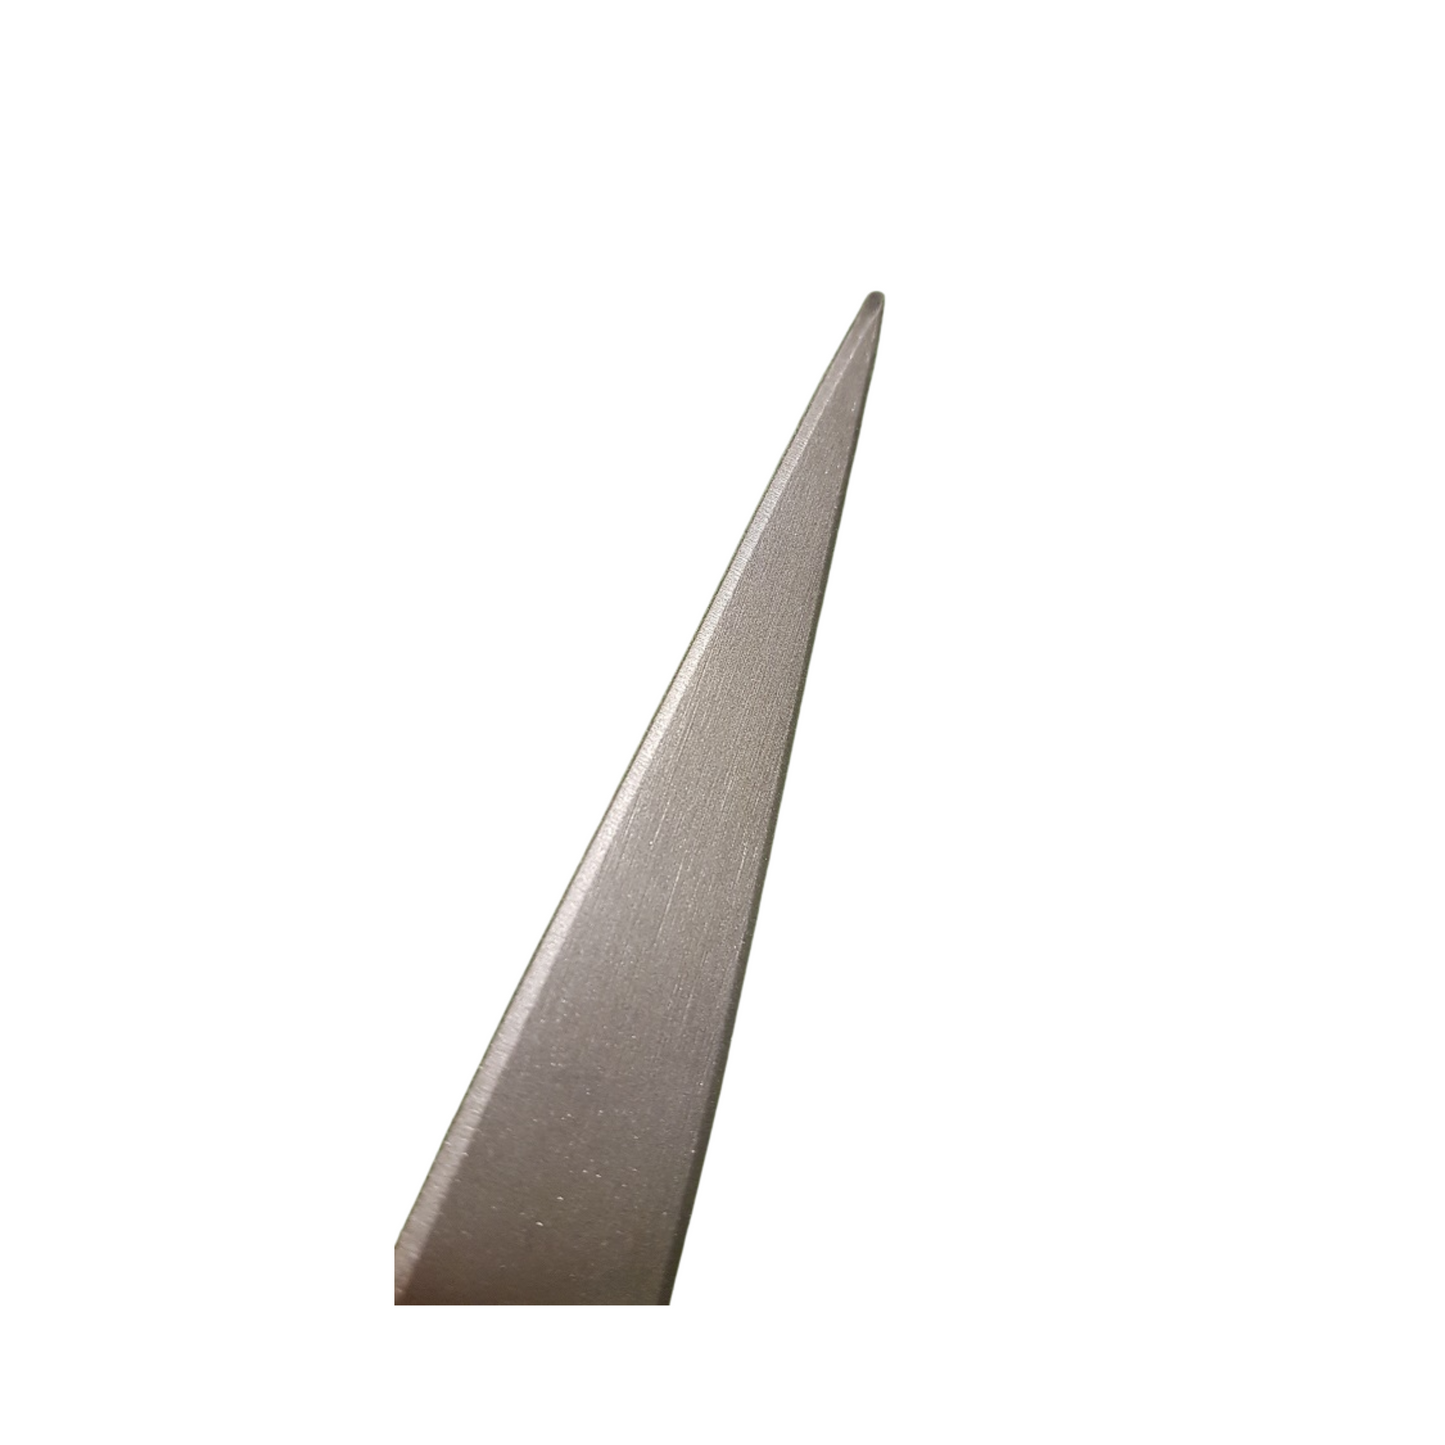 Barnel Tools Professional Diamond Sharpening Stone B-SHARP XL